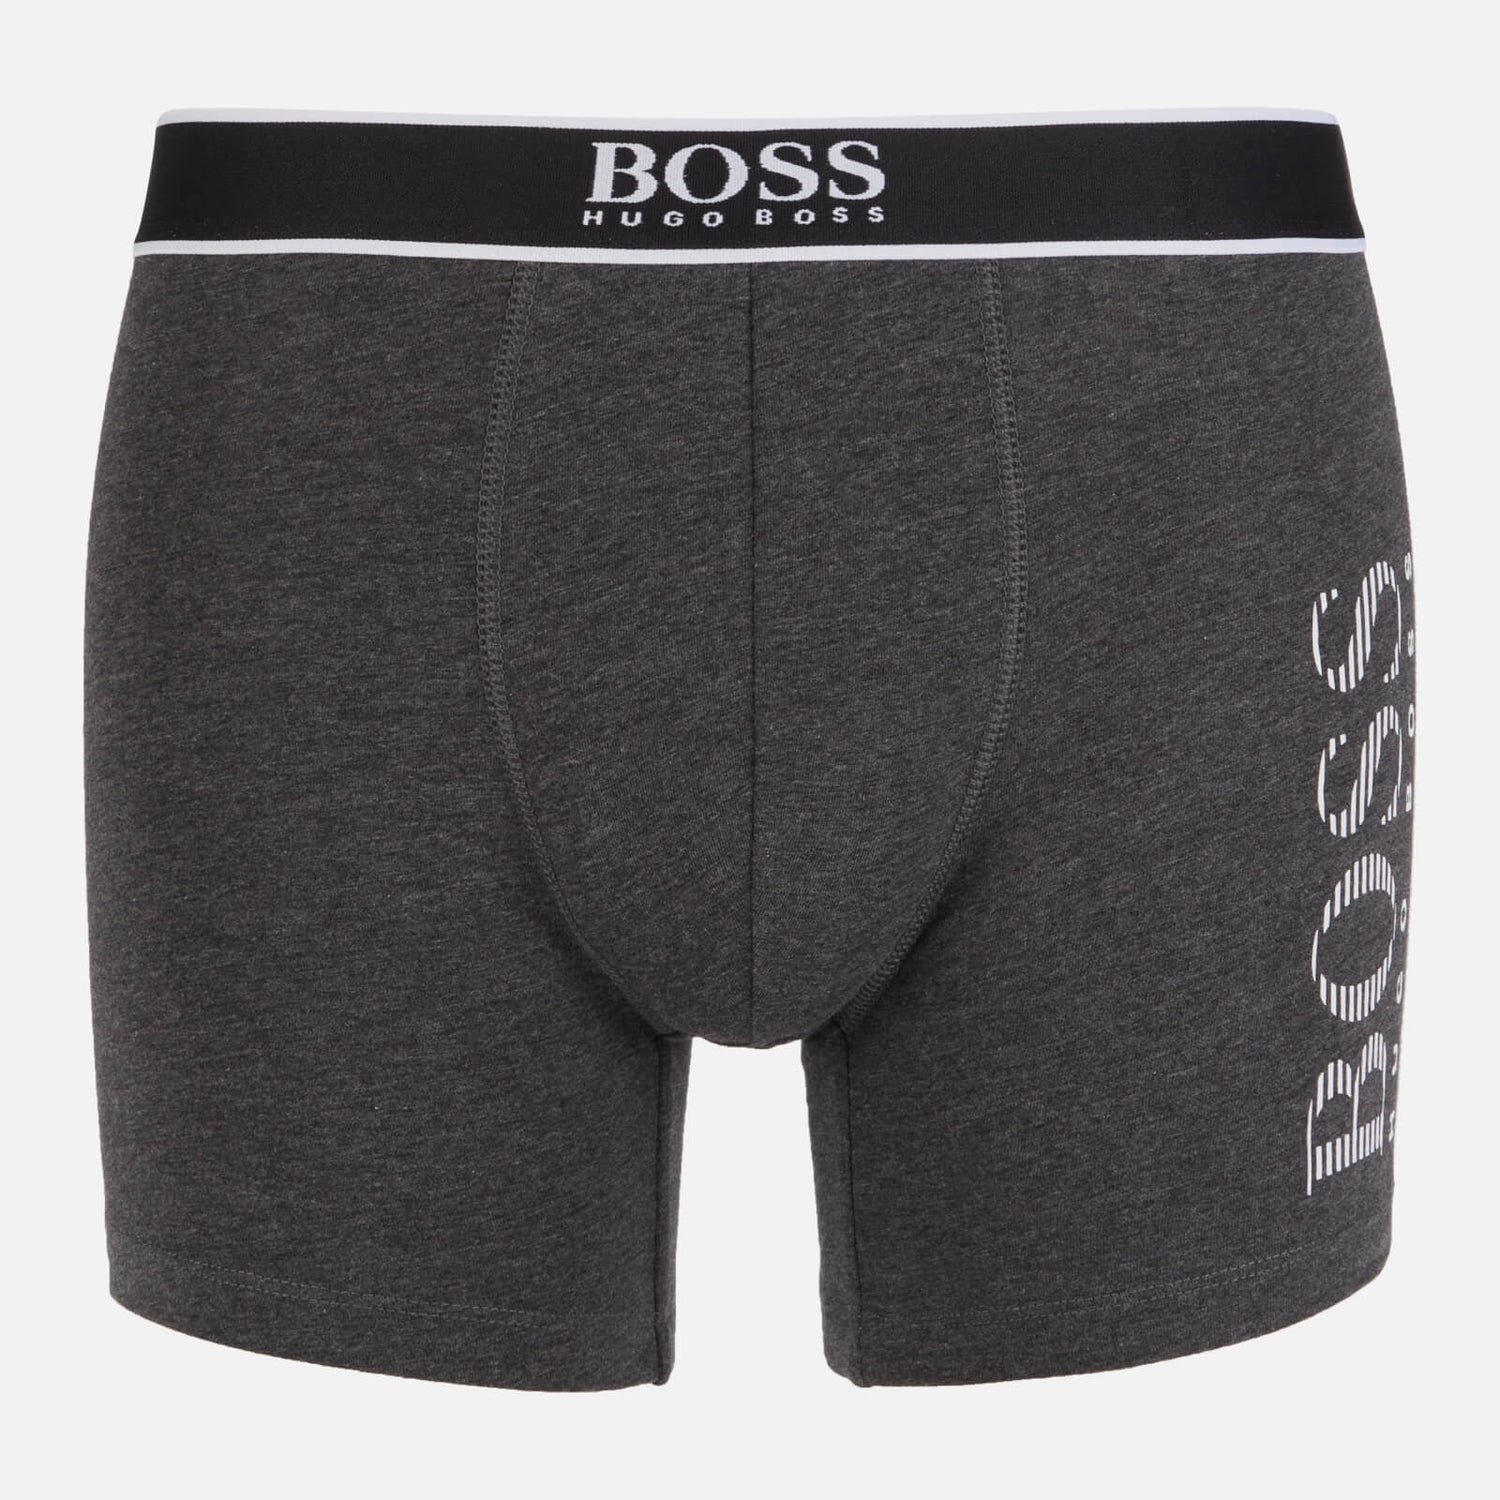 BOSS Bodywear Men's 24 Logo Boxer Briefs - Charcoal - S